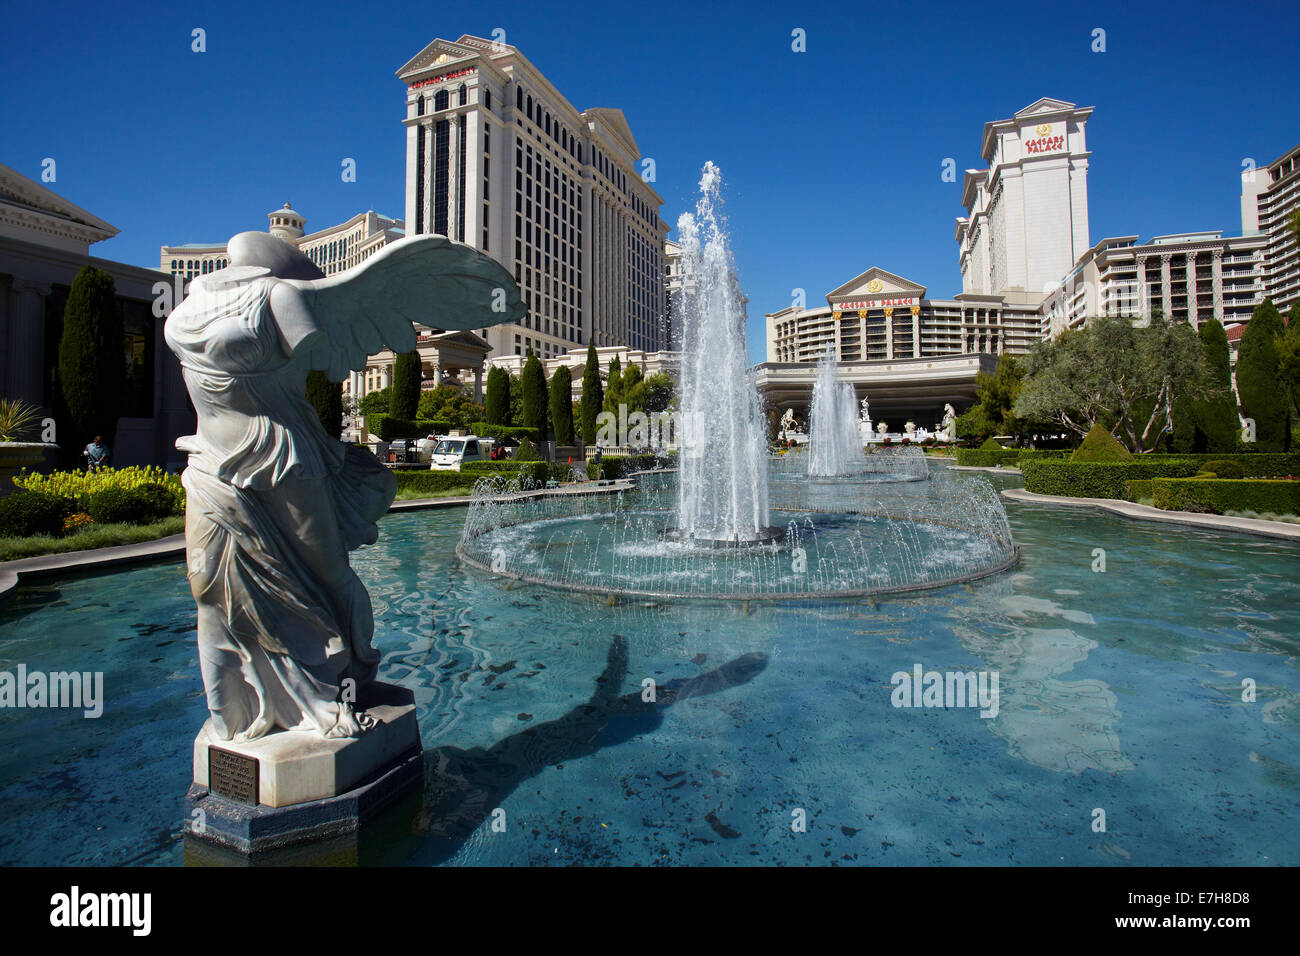 "Winged Sieg von Samothrace" Replikat Statue und The Fountains, Caesars Palace Hotel und Casino, Las Vegas, Nevada, USA Stockfoto